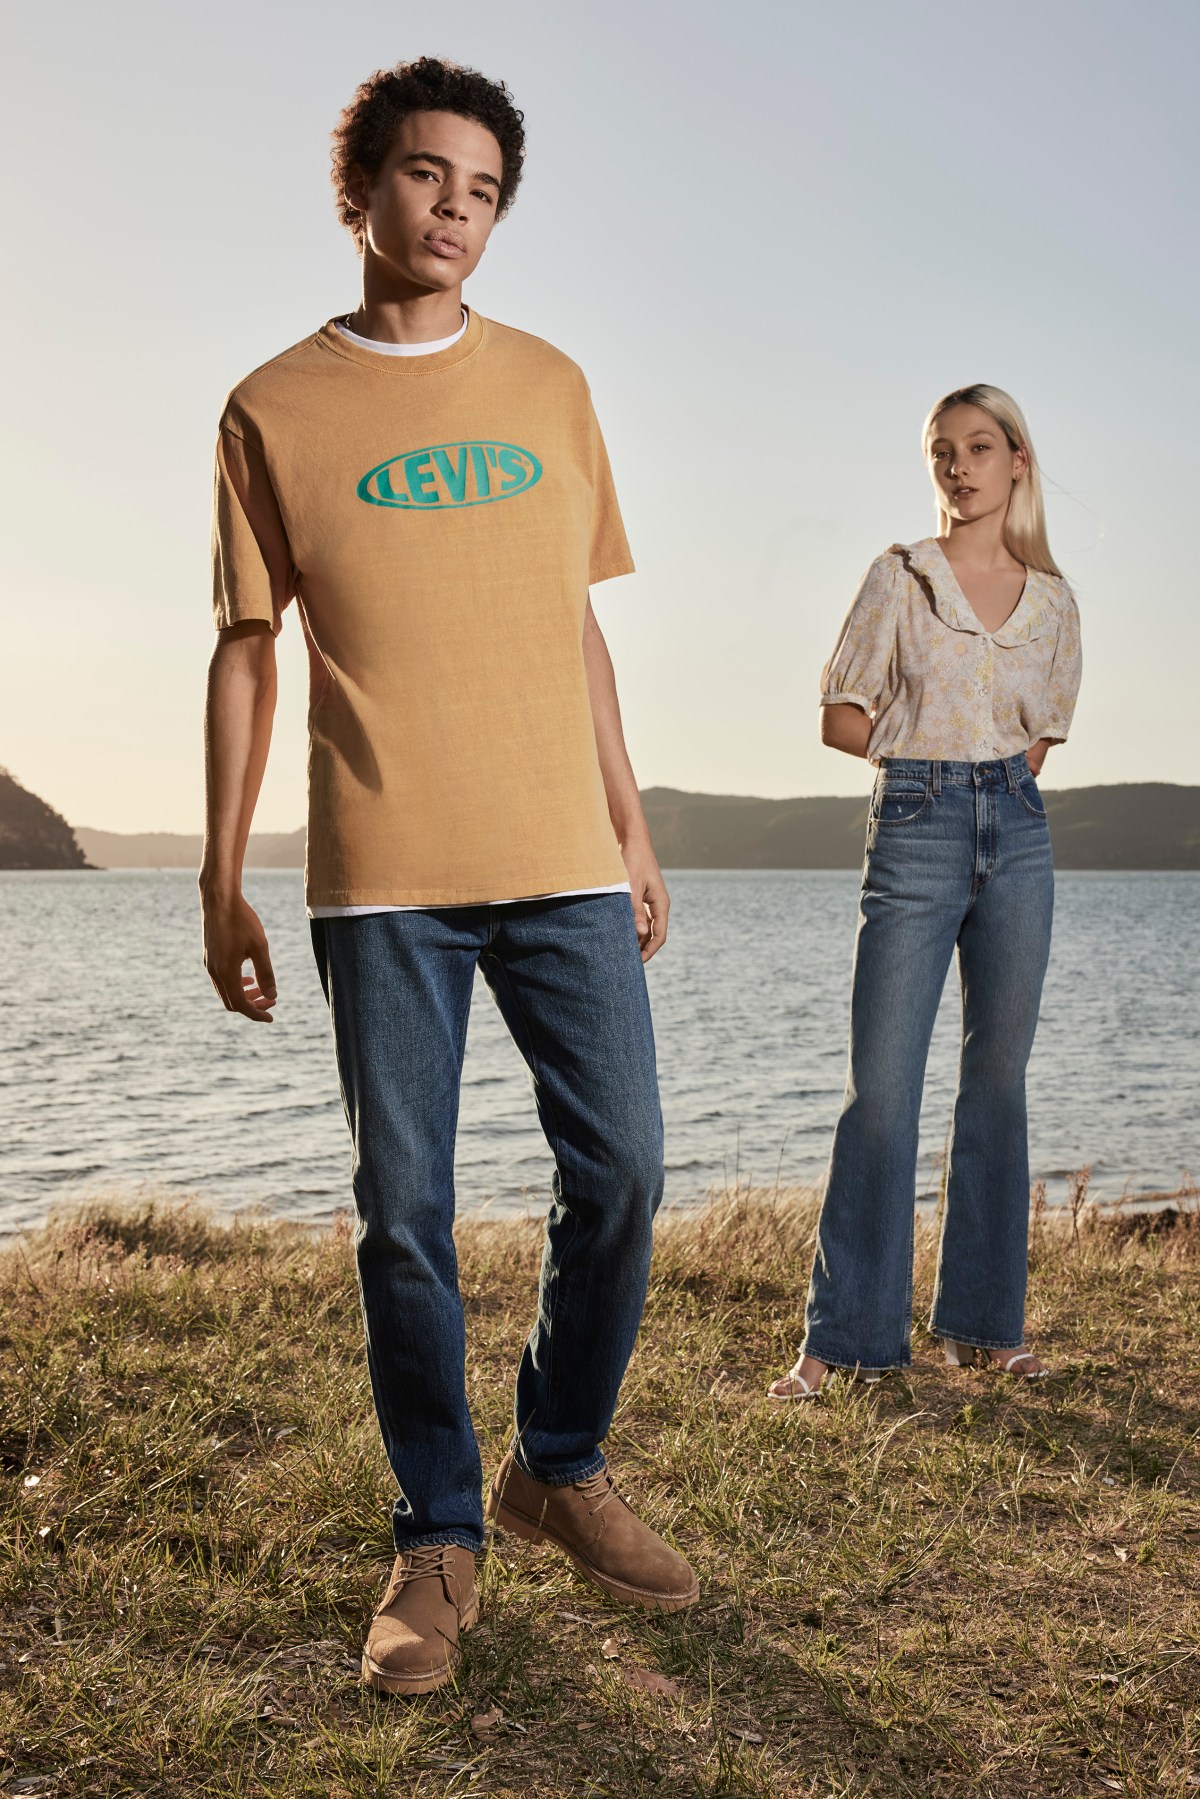 Levi's Jeans models